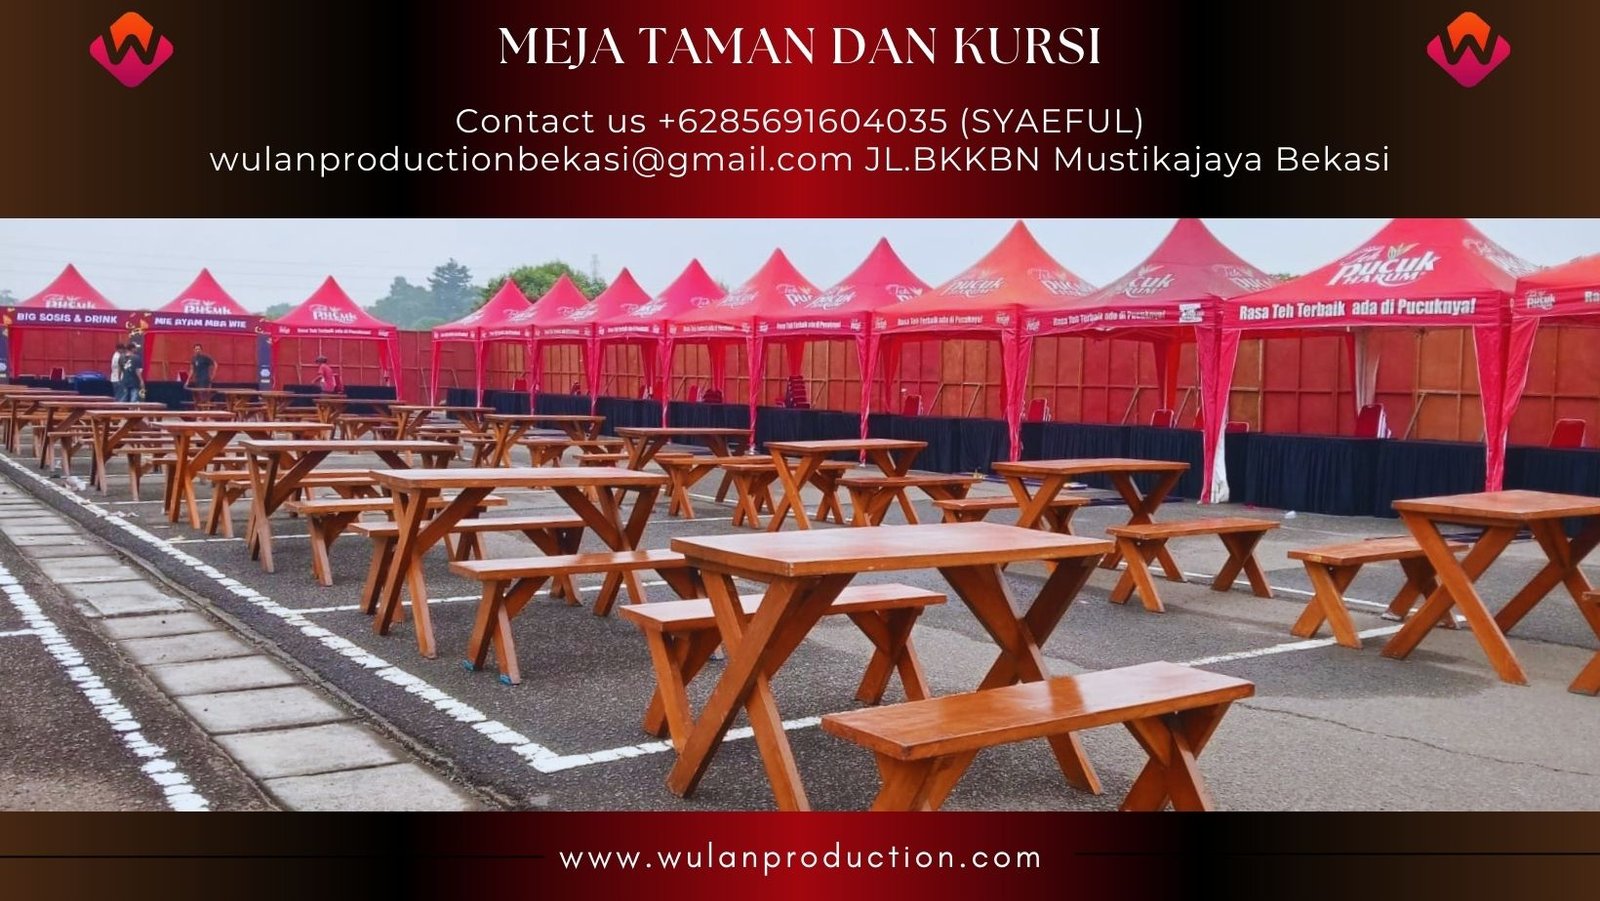 Sewa Meja Taman Untuk Event dan Festival di Tangerang